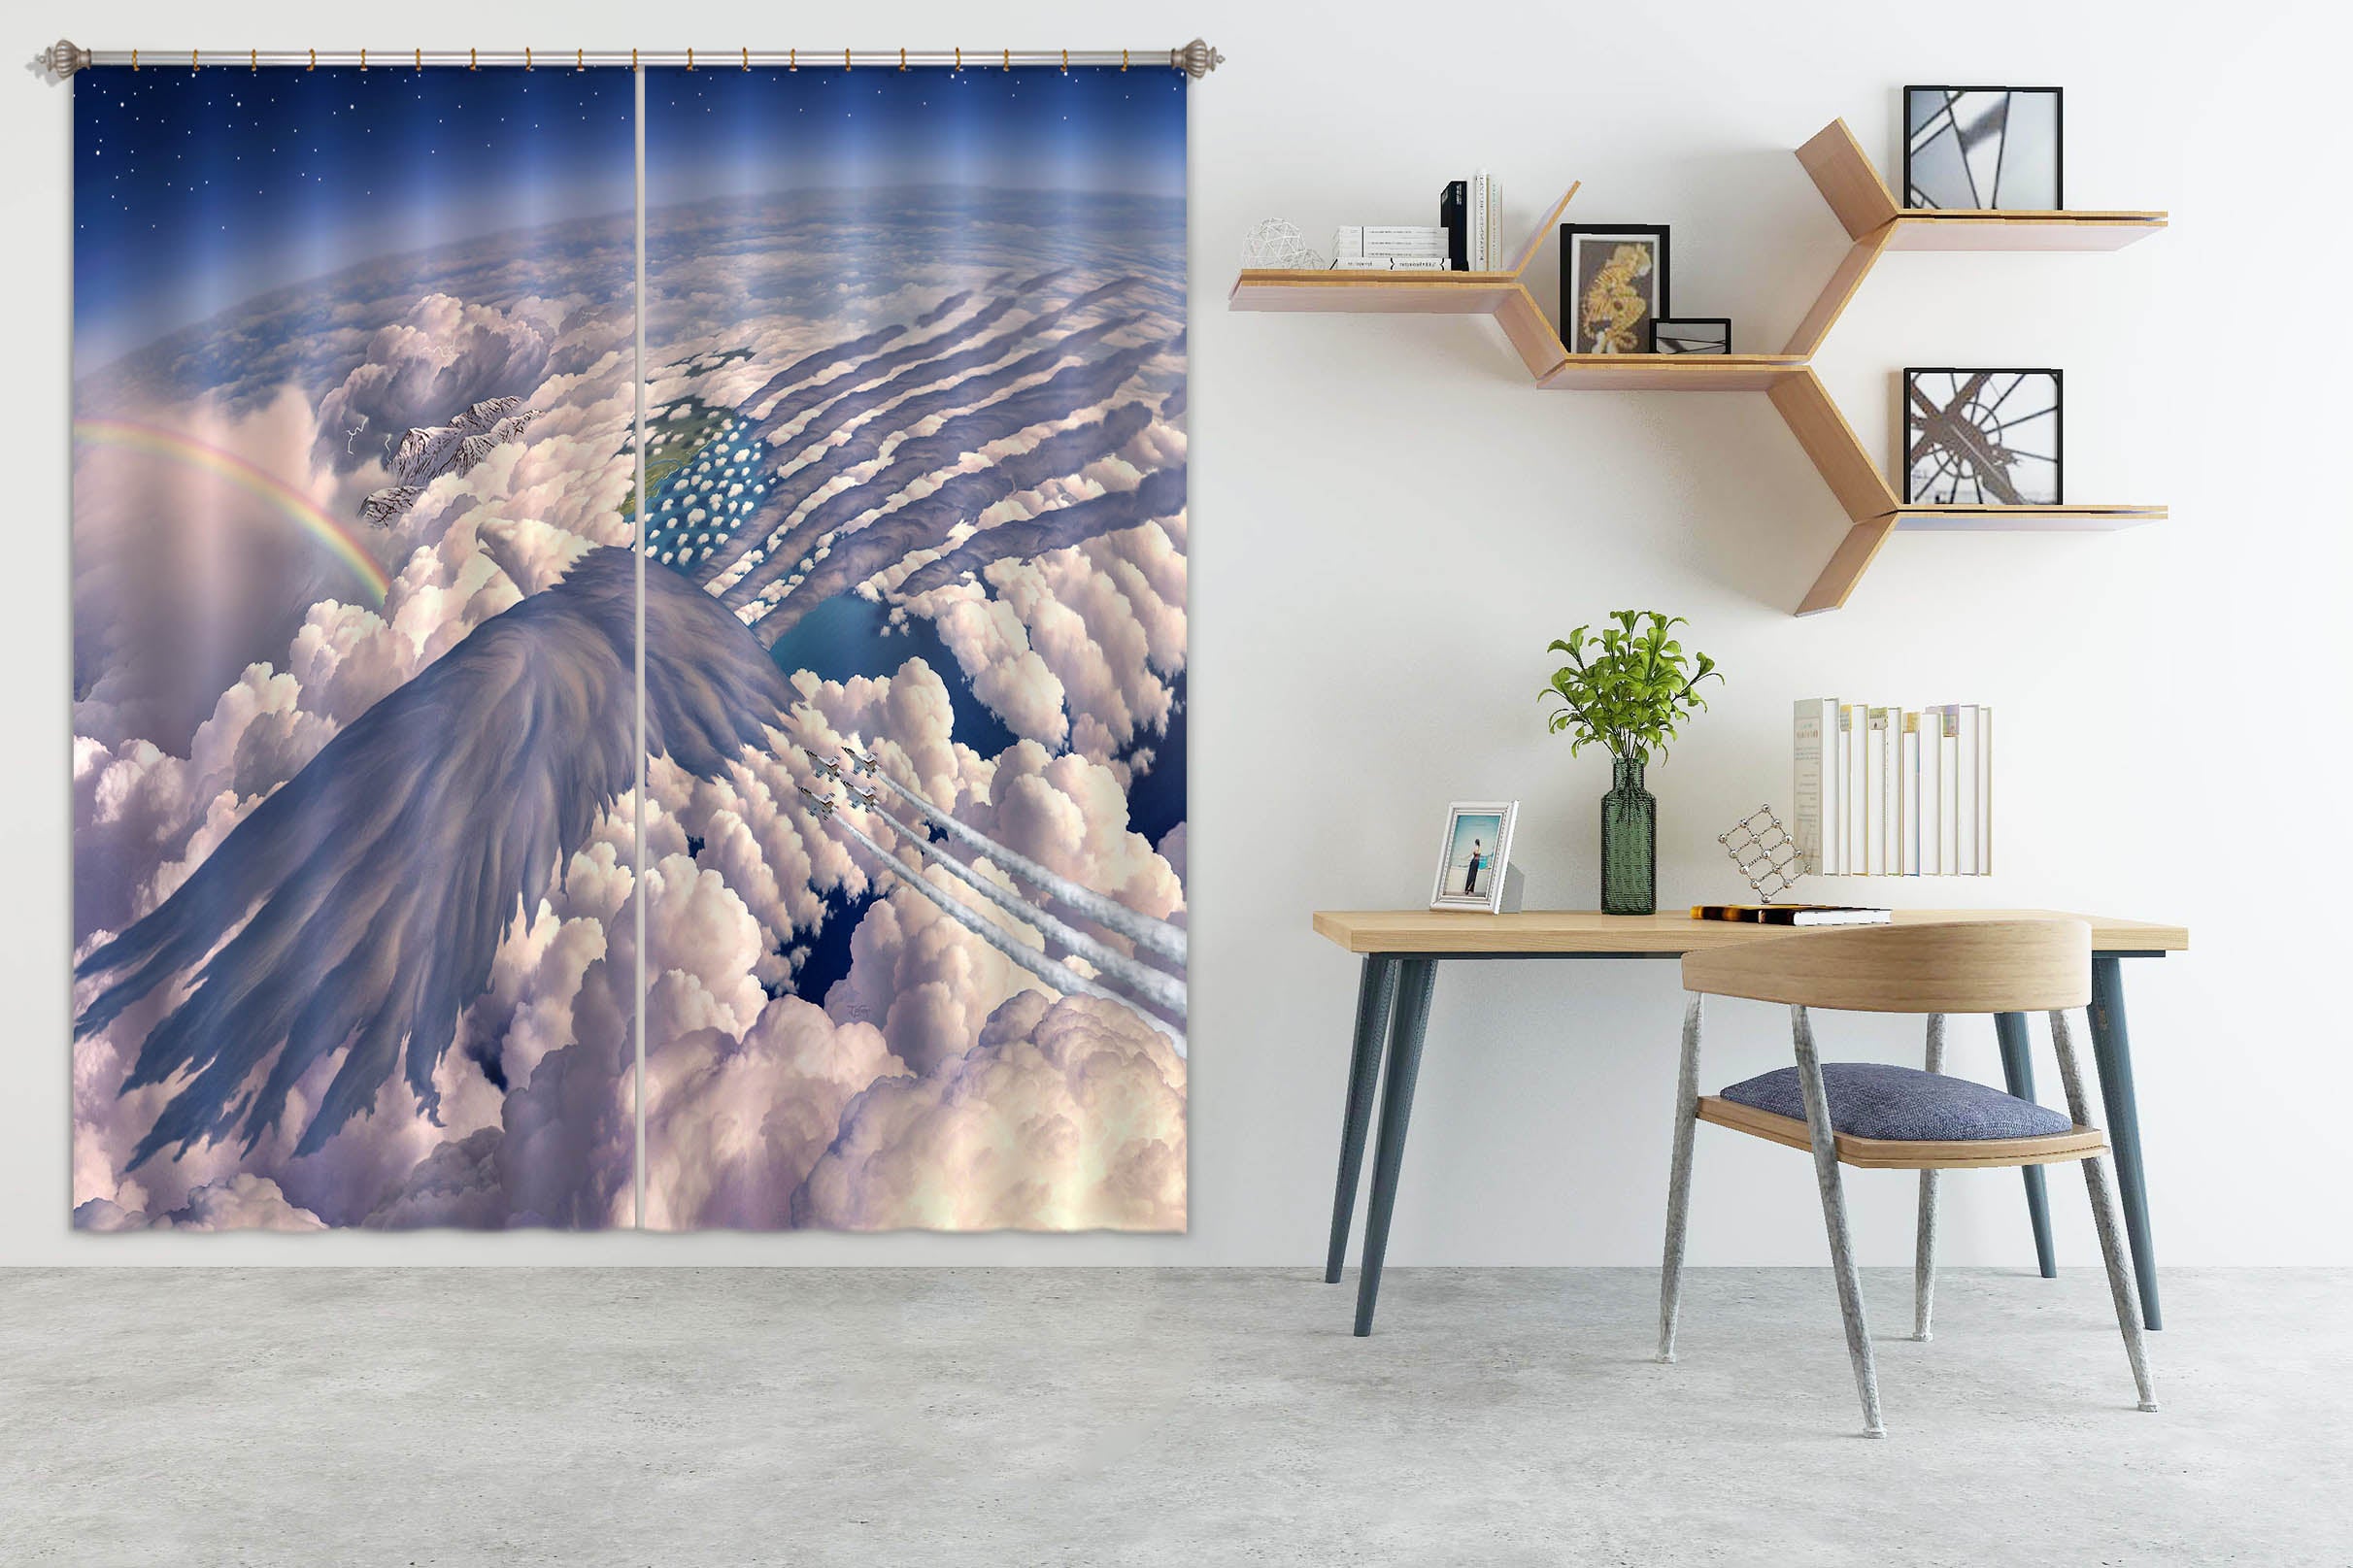 3D Clouds 86087 Jerry LoFaro Curtain Curtains Drapes